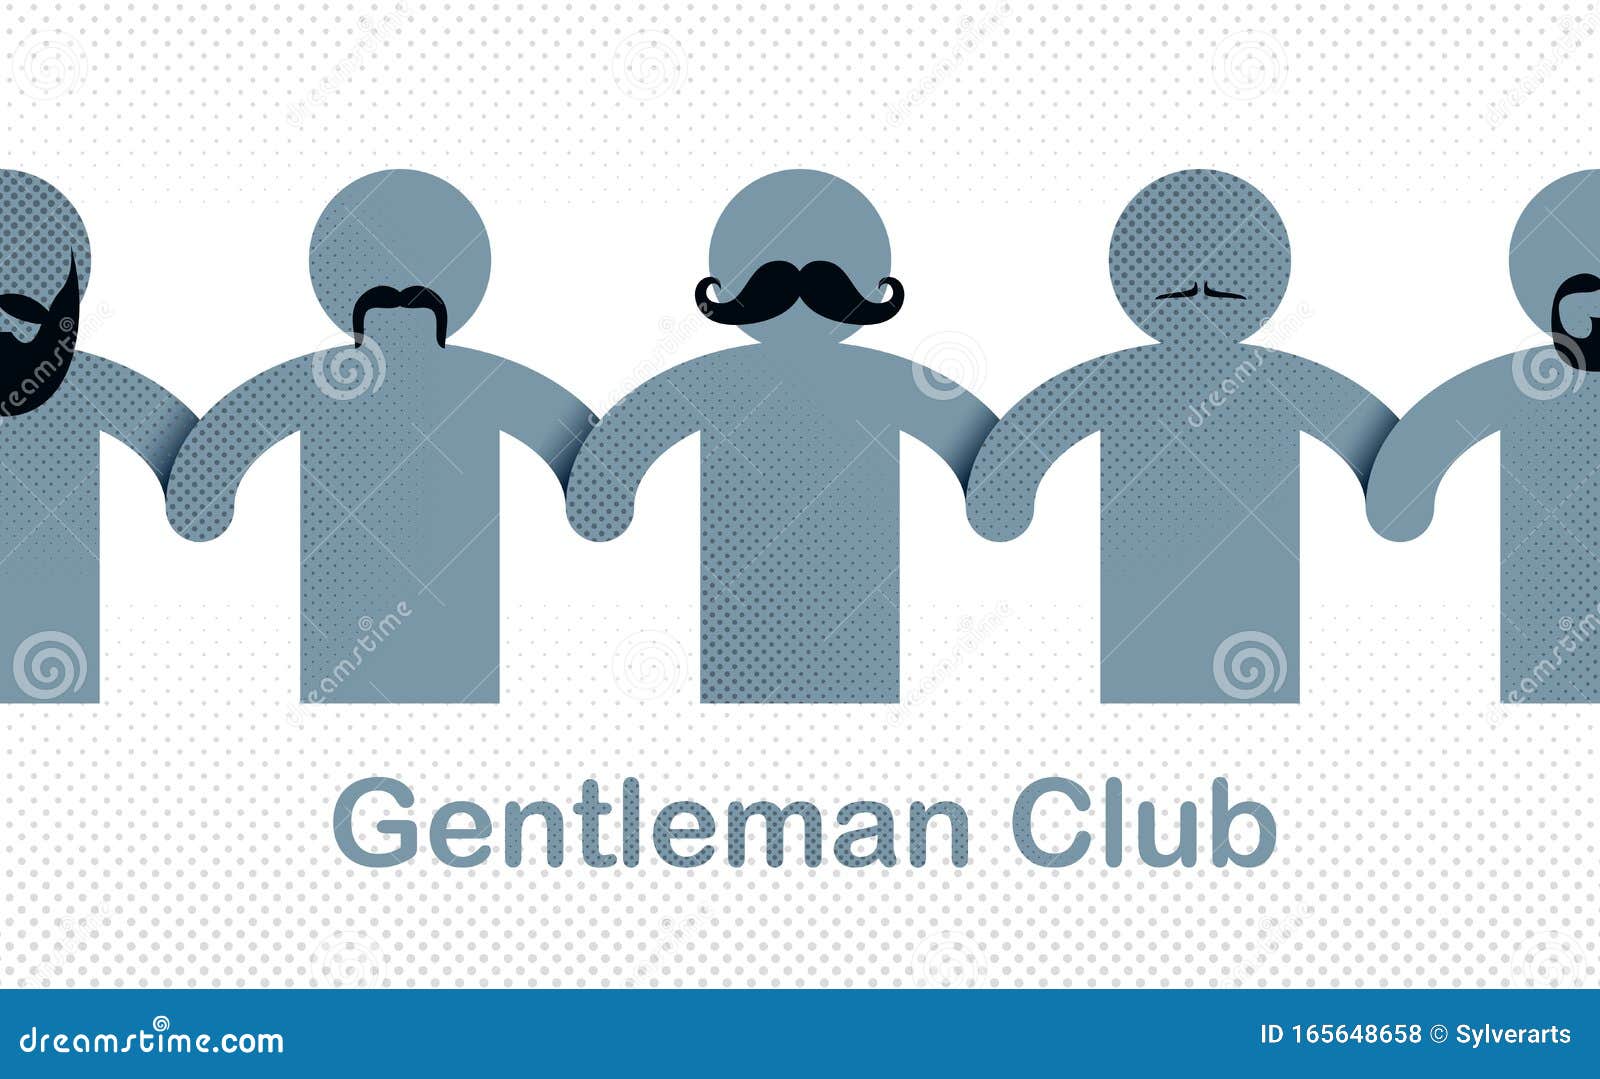 man day international holiday, gentleman club.